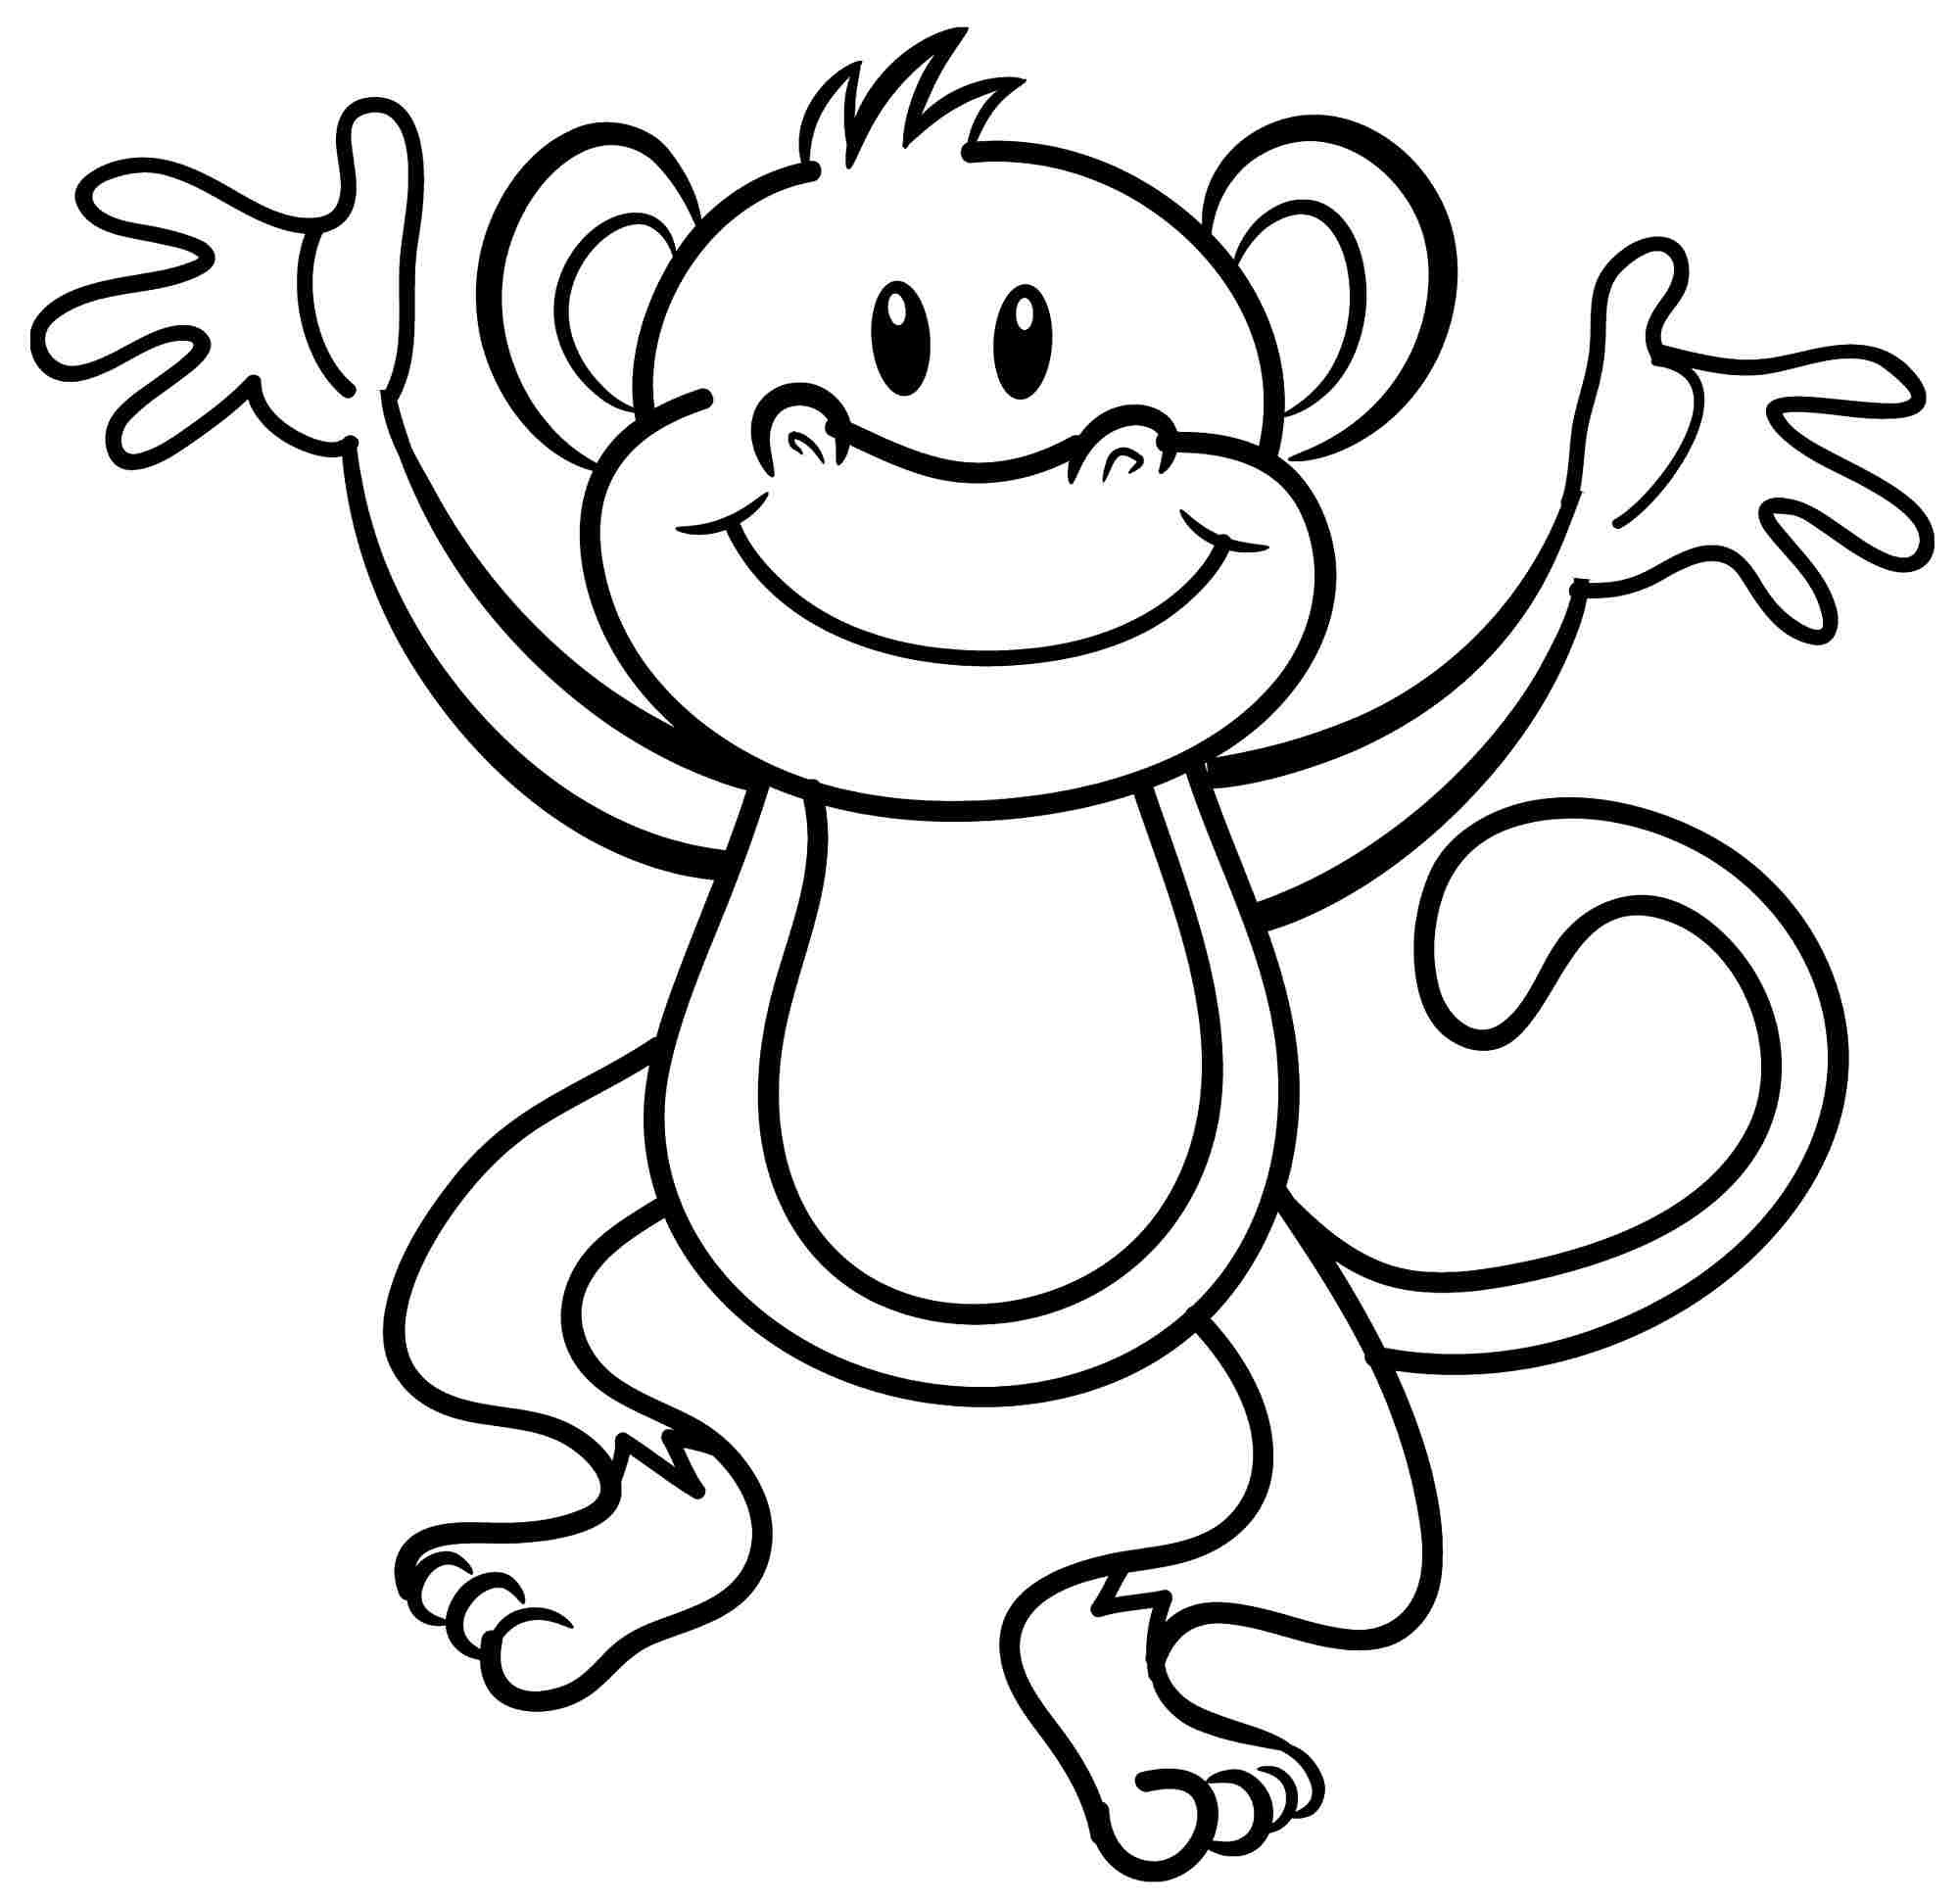 Free Preschool Coloring Sheets Of Monkeys
 7 Best of Printable Animal For